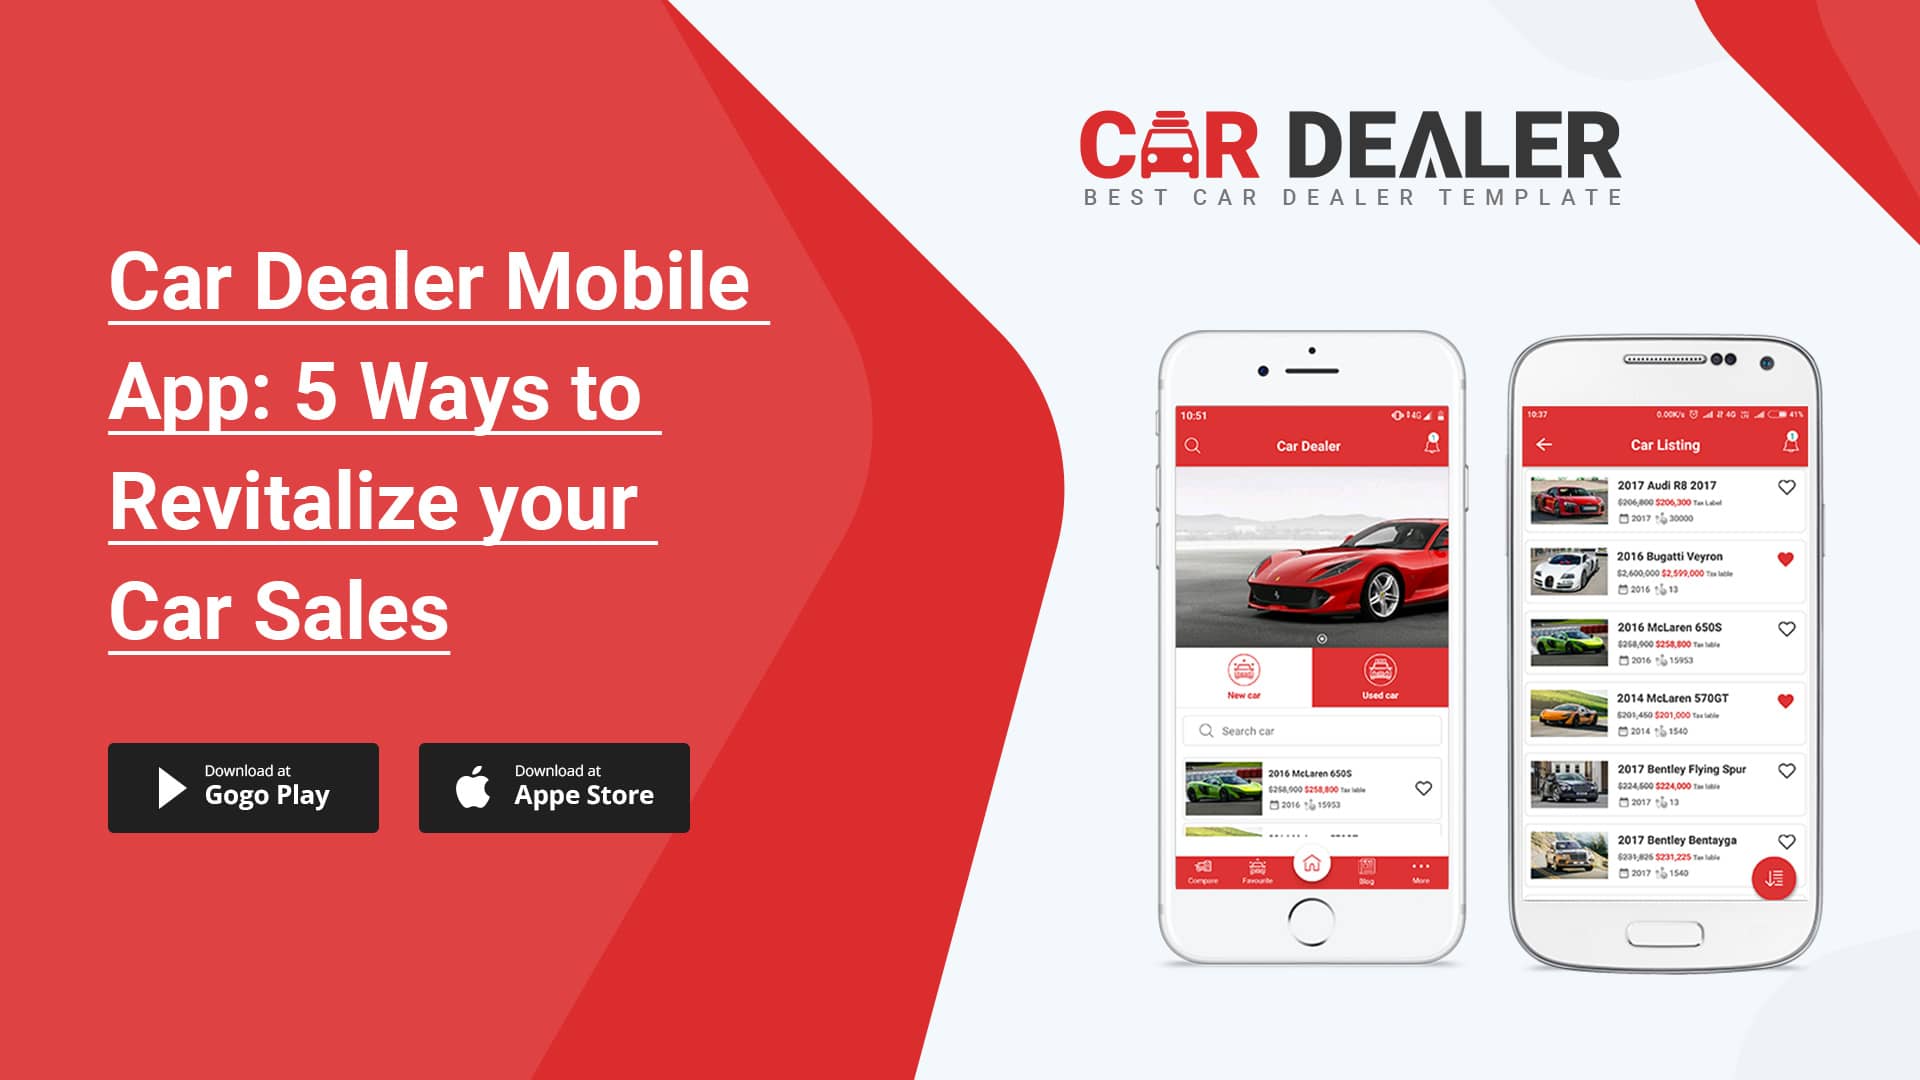 Car Dealer Mobile App: 5 Ways to Revitalize your Car Sales